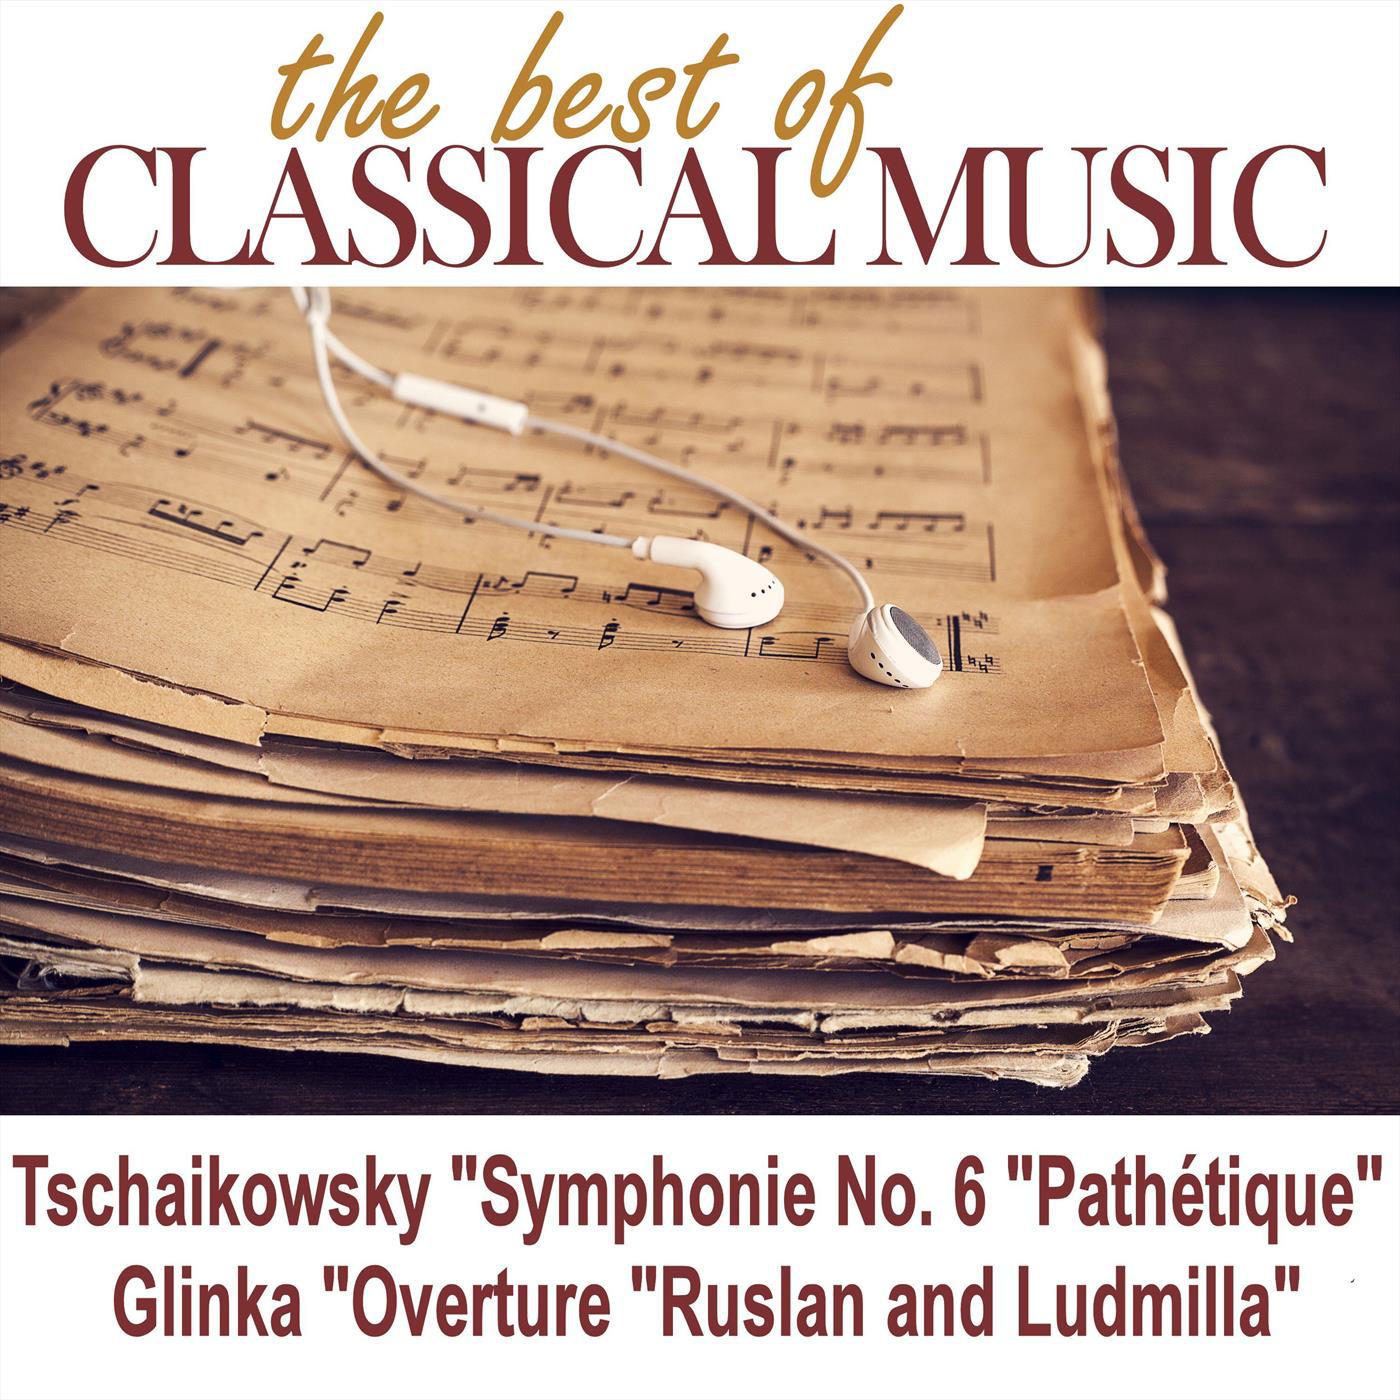 Symphony no.6 in b - minor, op.74 "Pathetique" - Allegro con grazia (Tchaikovsky)